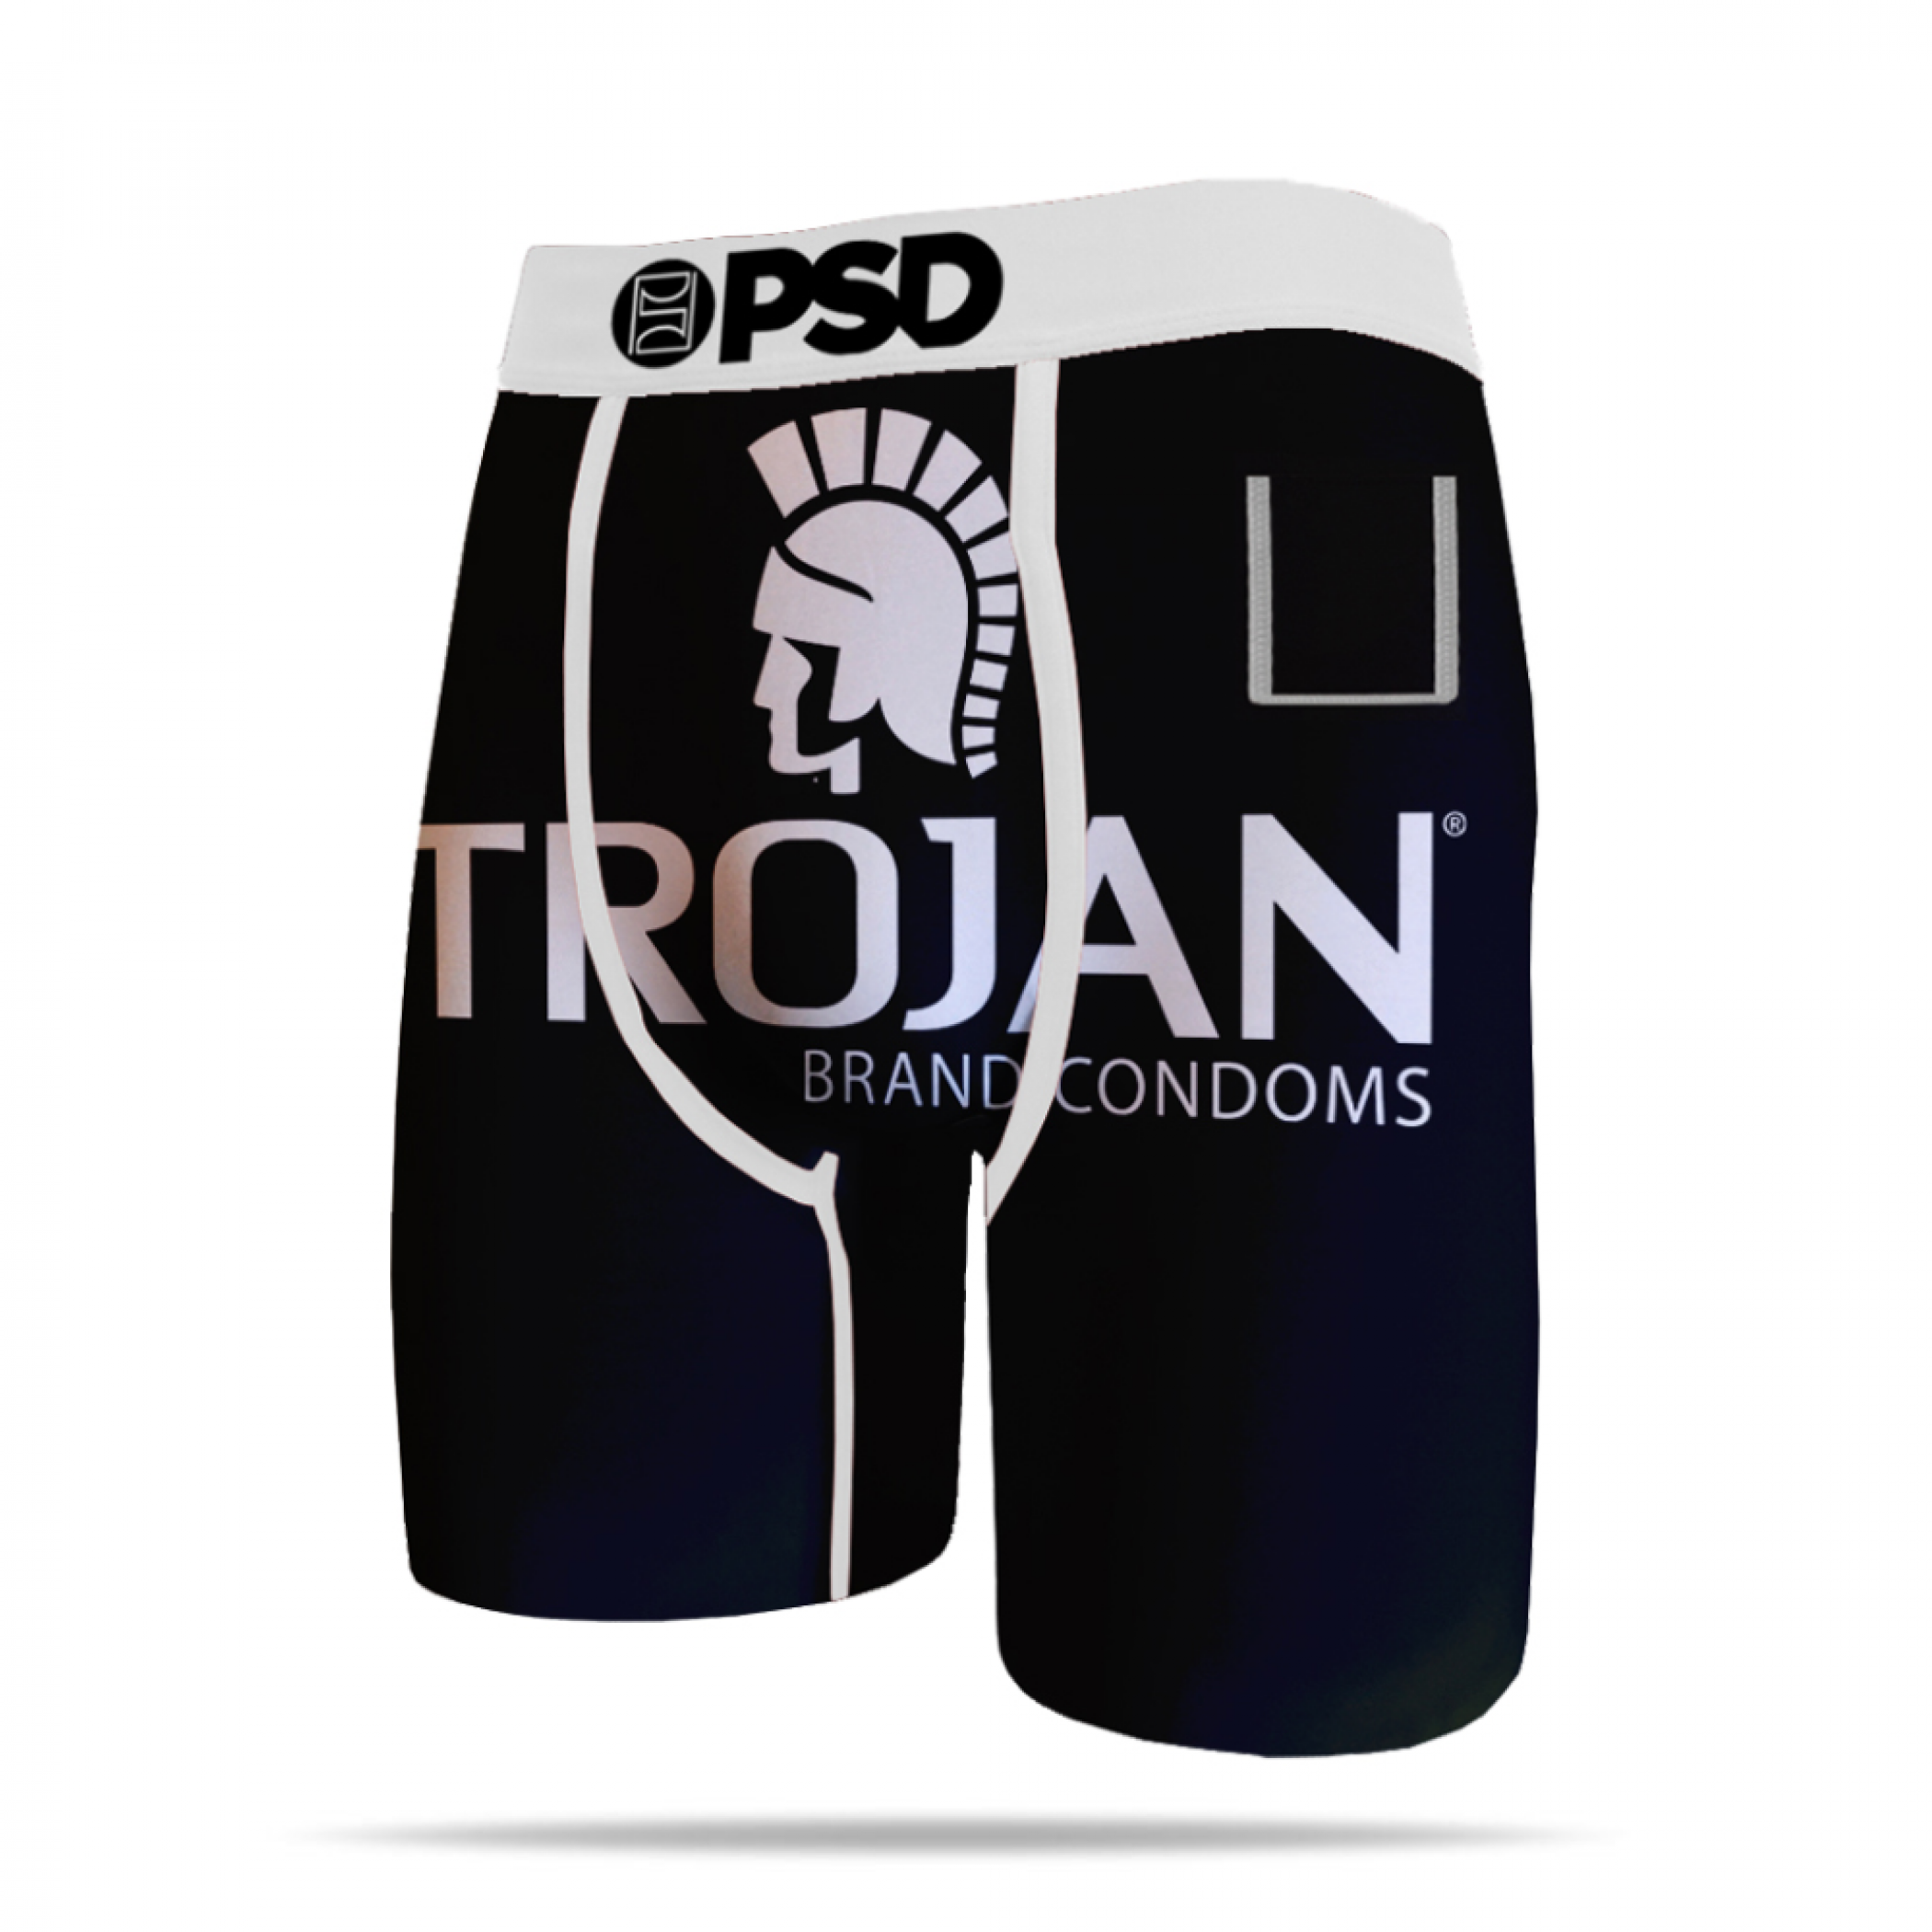 Trojan Condoms Logo Men's Boxer Briefs